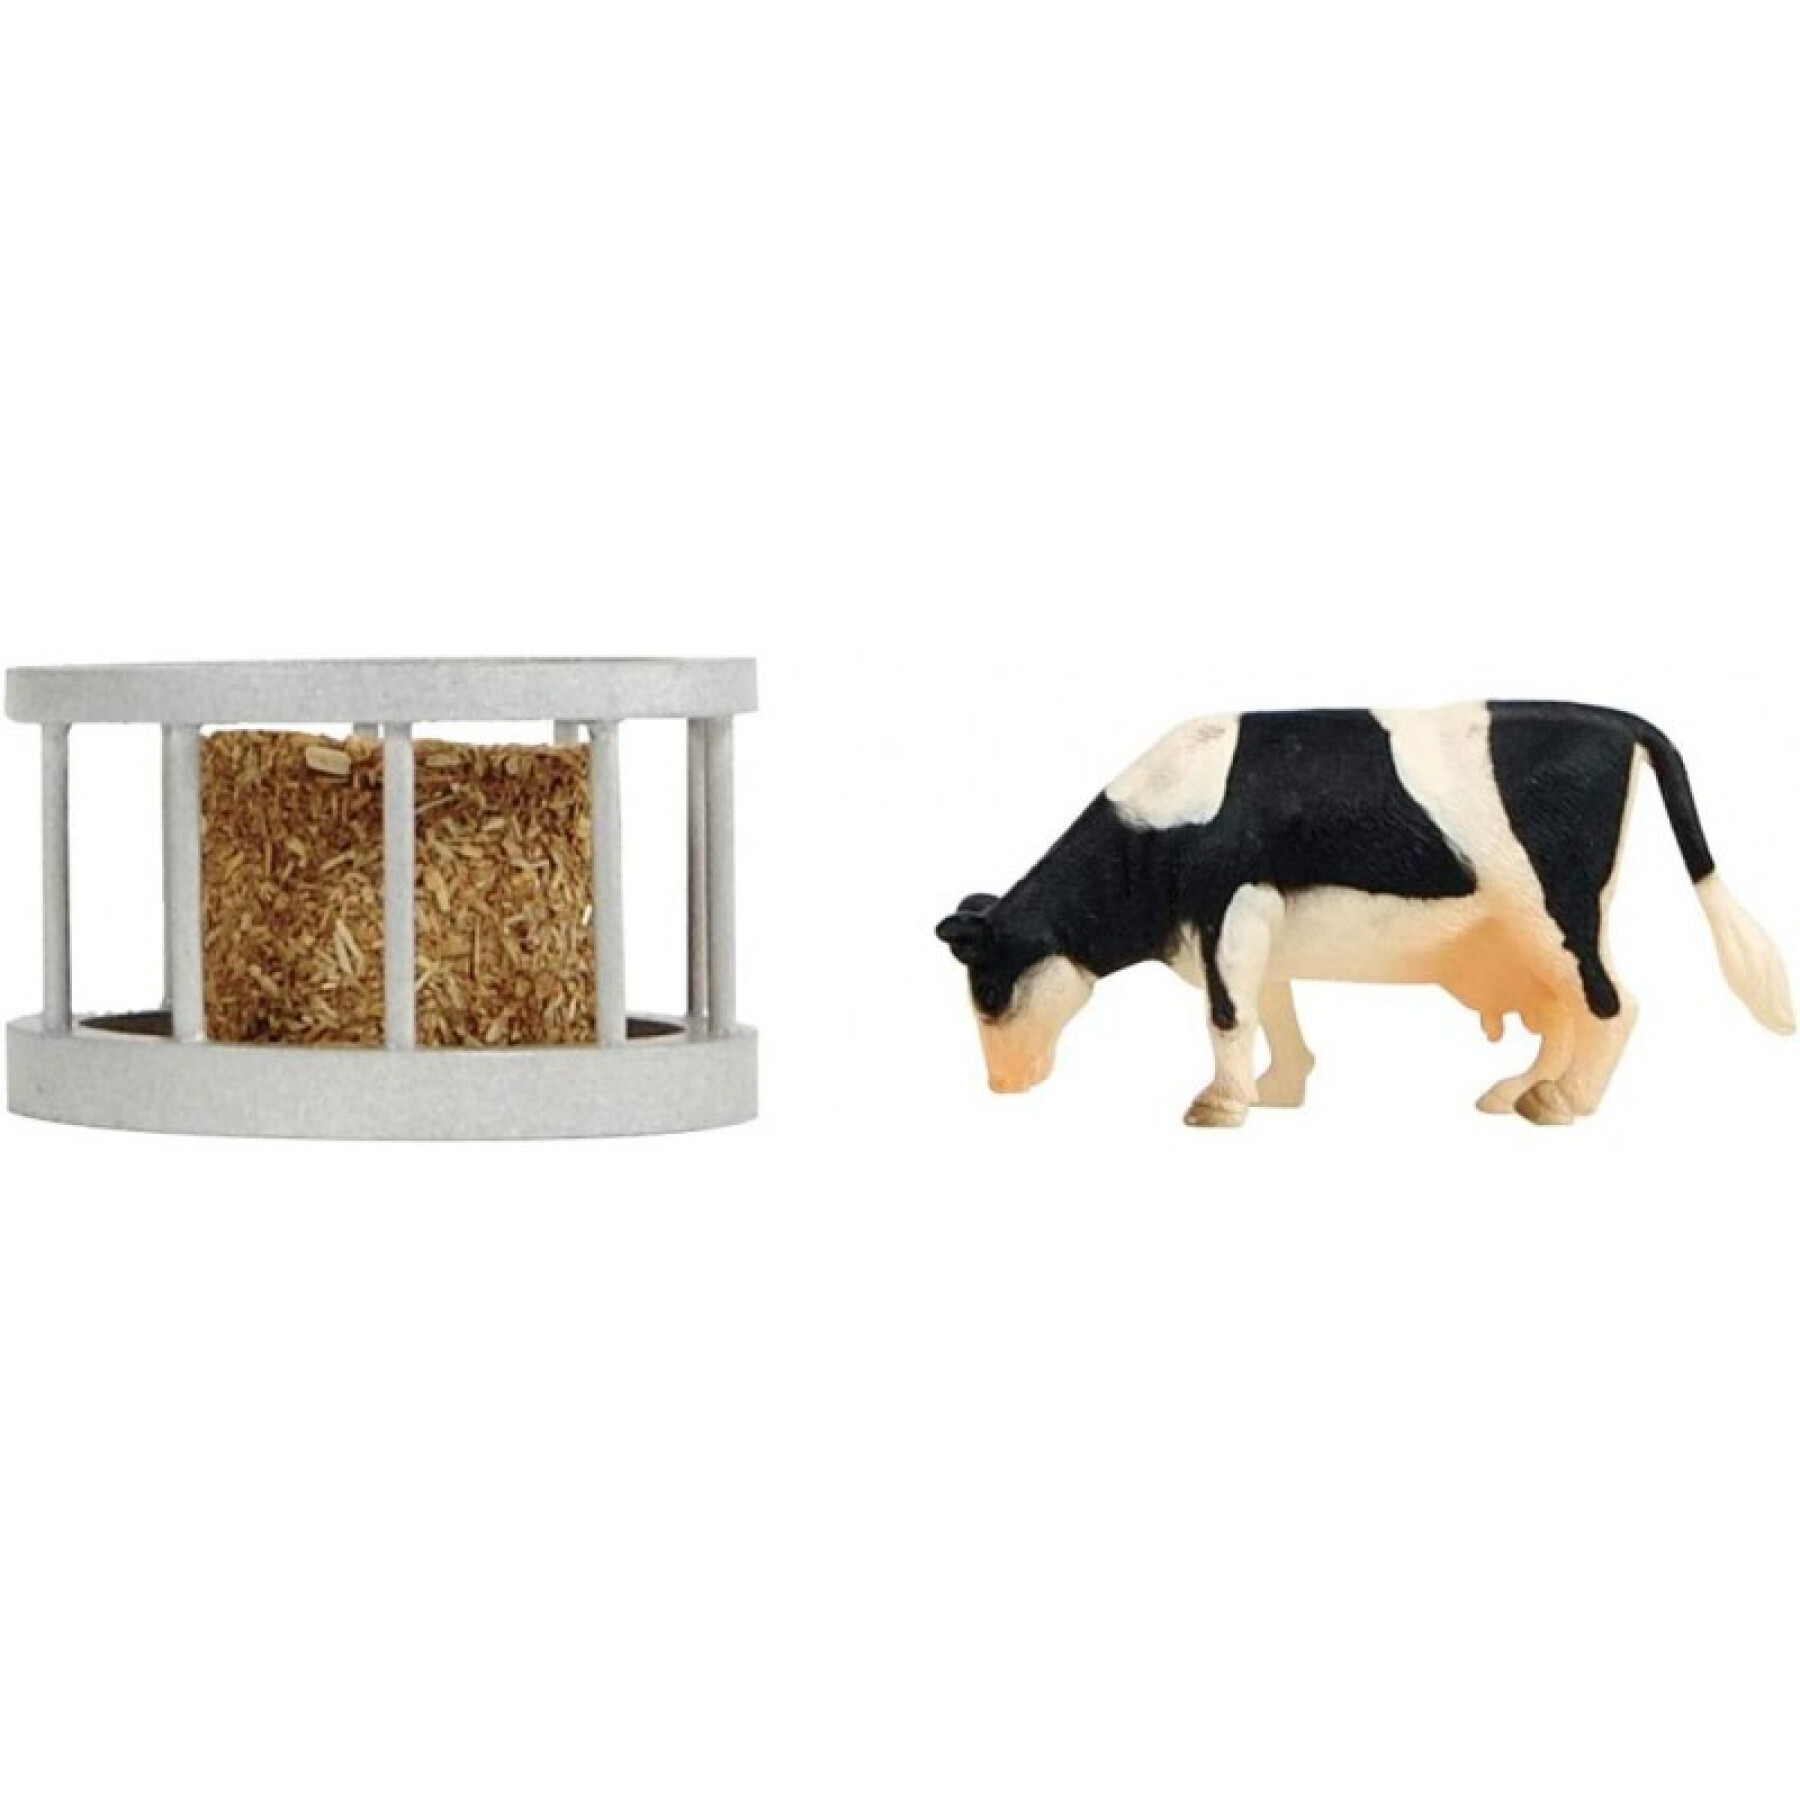 Figurita bovino set de alimentación, paca de paja, vaca Kidsglobe